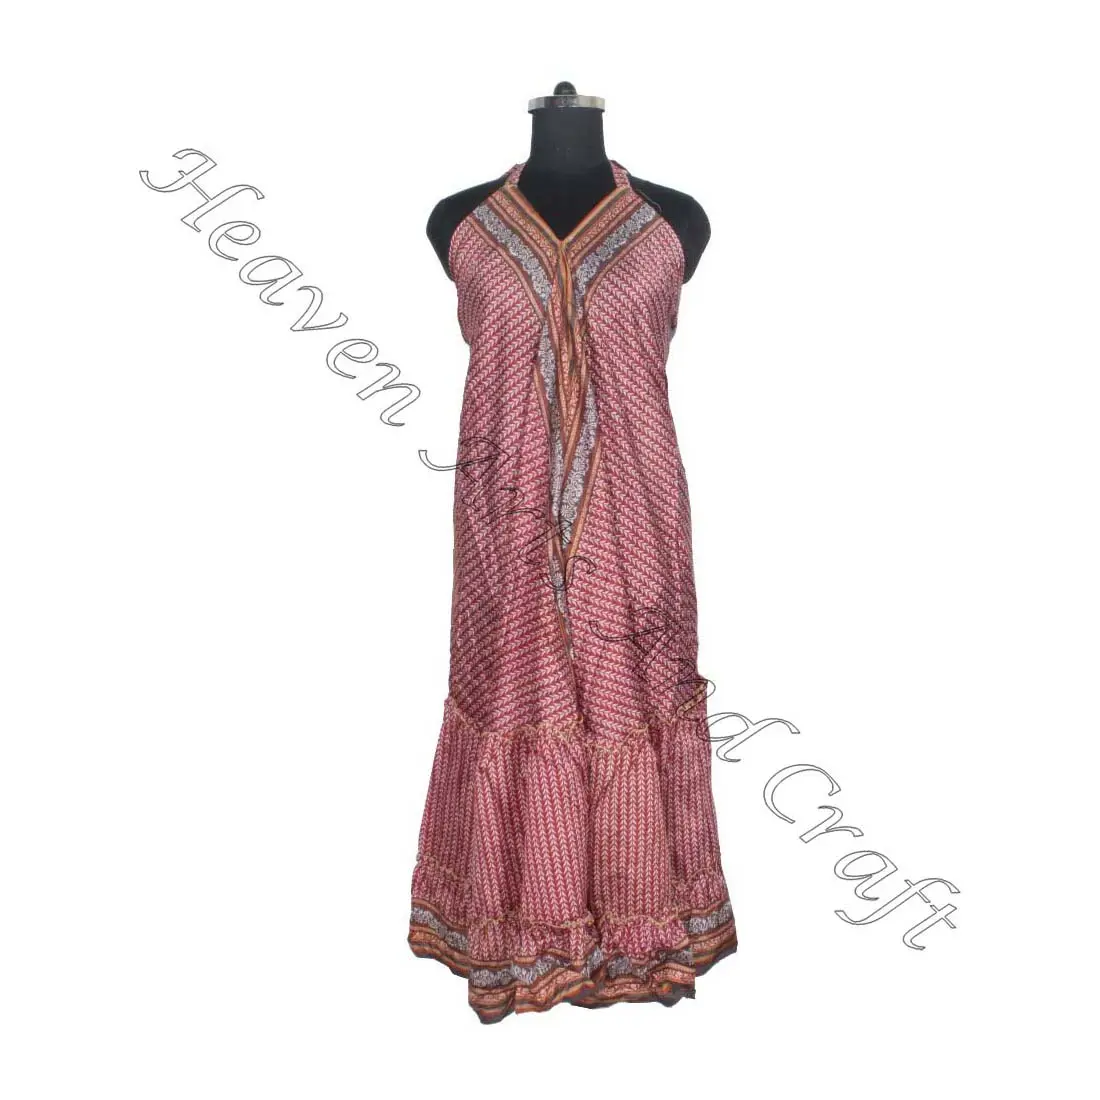 SD019 Saree / Sari / Shari Indian & Pakistani Clothing from India Hippy Boho Latest Traditional Long V-Neck Indian Vintage Sari